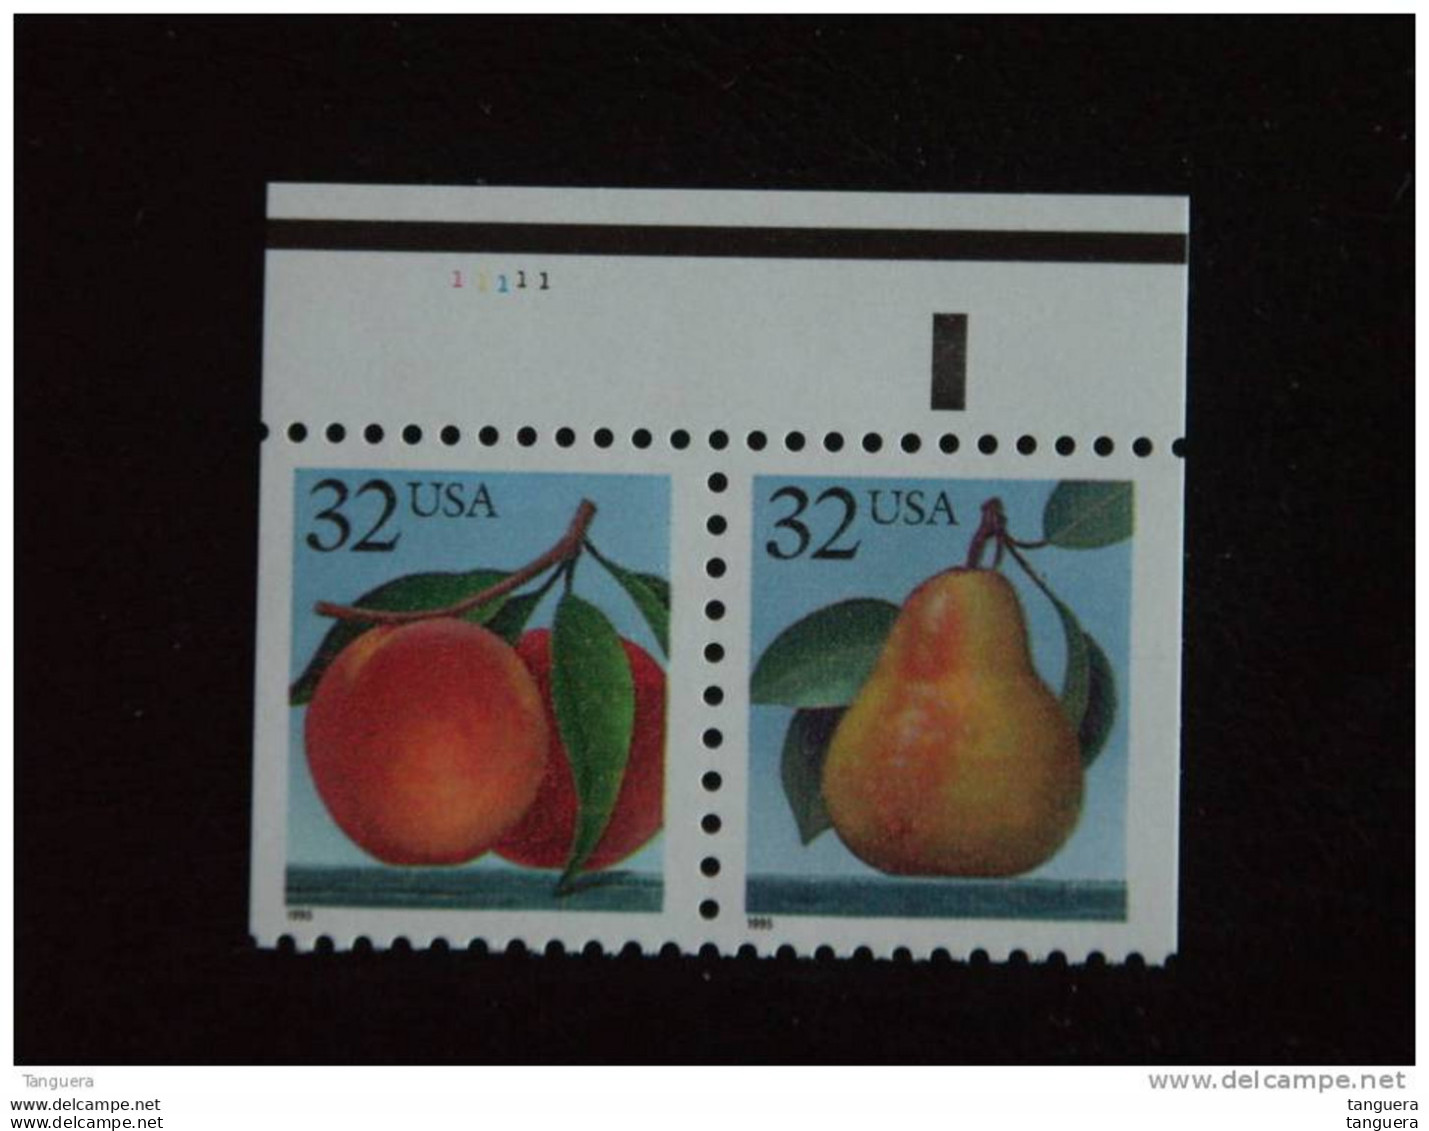 USA Etats-Unis United States 1995 Peaches And Pears Fruit Yv 2382-2383 MNH ** Plate N° 1111 - Nuovi